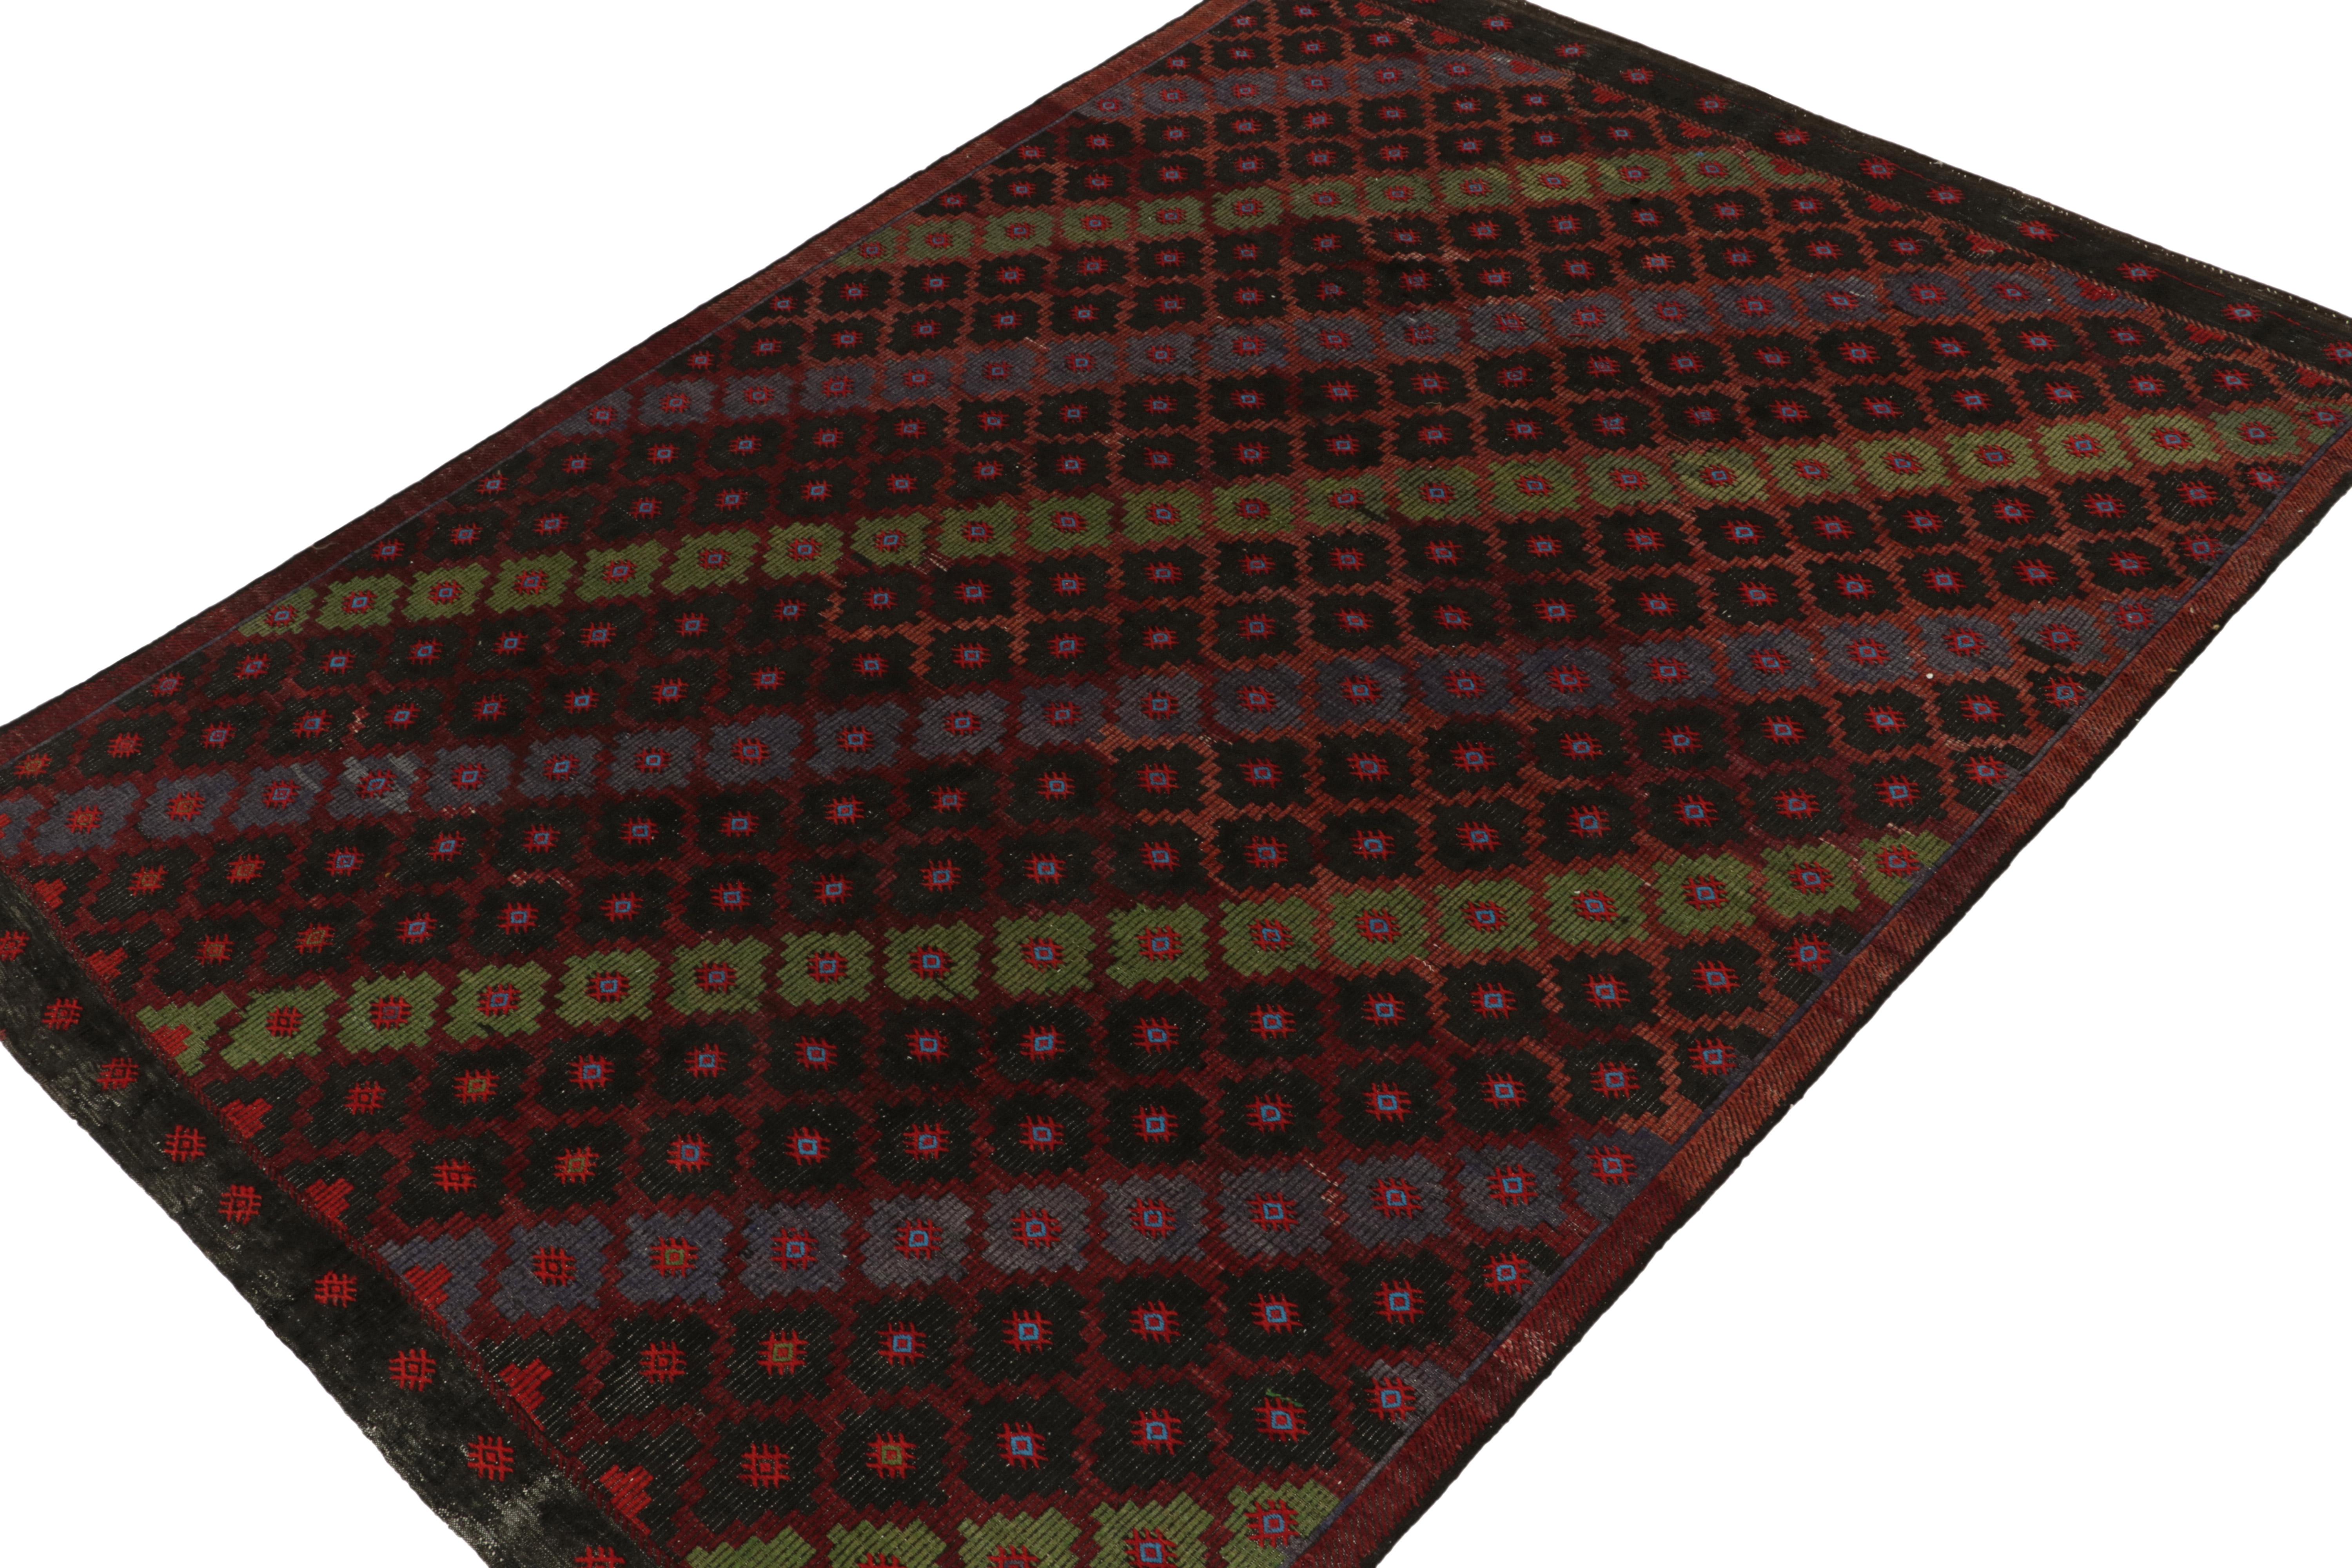 Turkish Vintage Cecim Tribal Kilim in Black and Red Geometric Patterns by Rug & Kilim For Sale